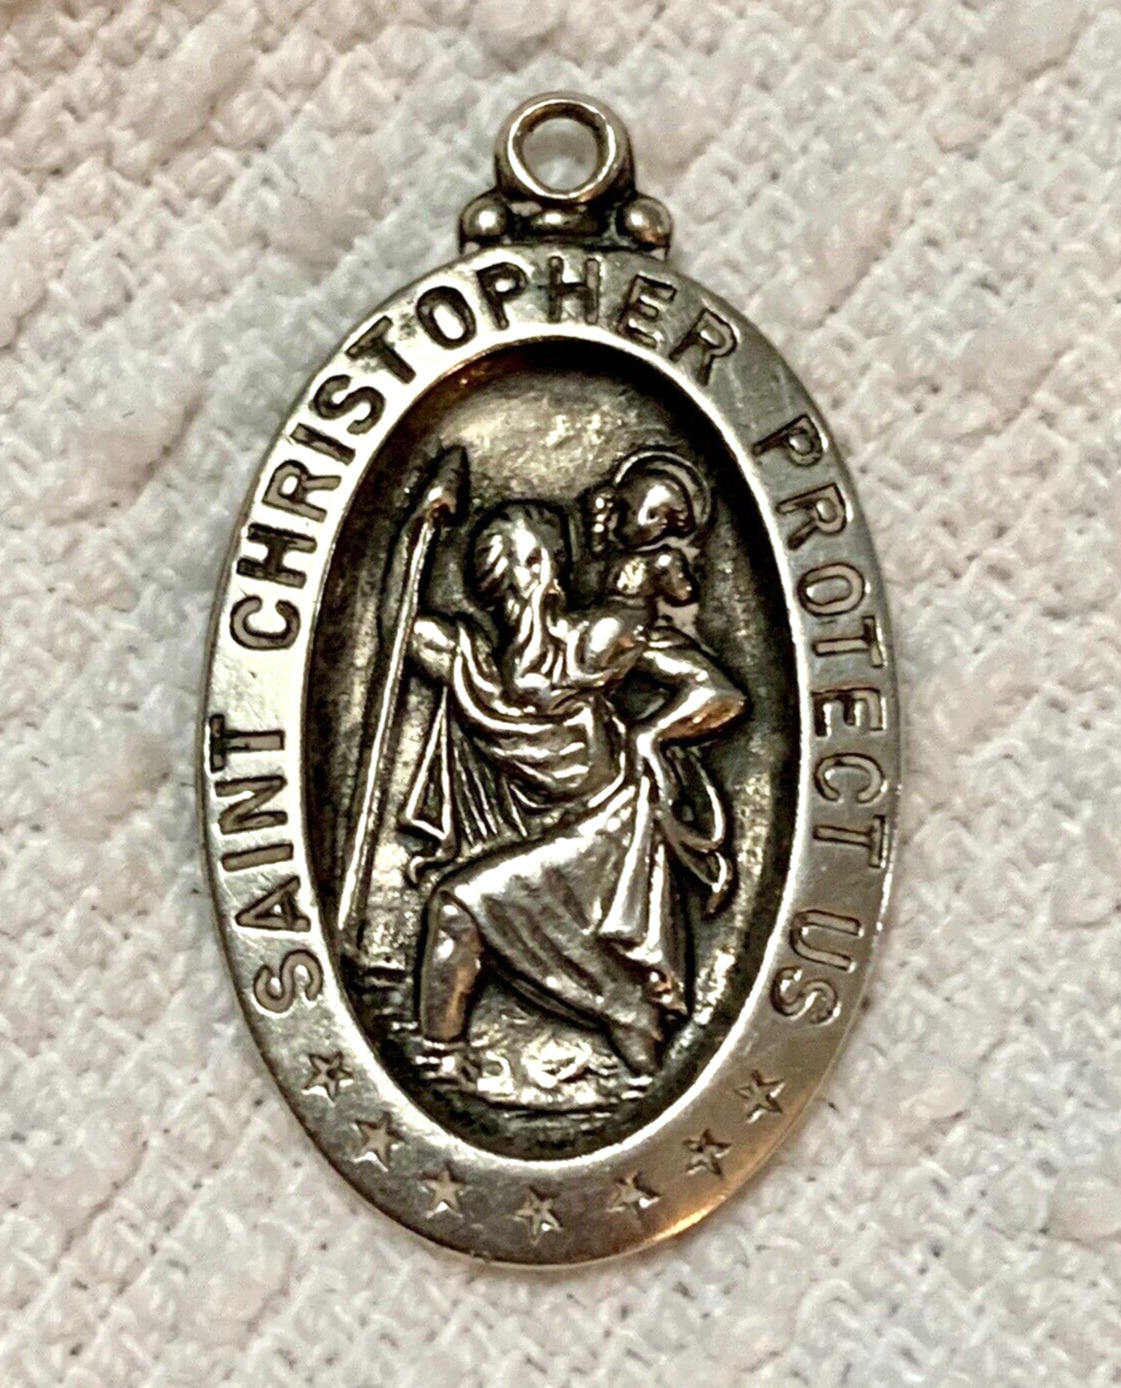 Vintage Sterling Silver 925 Saint Christopher Protect Us Medal Pendant Charm 1